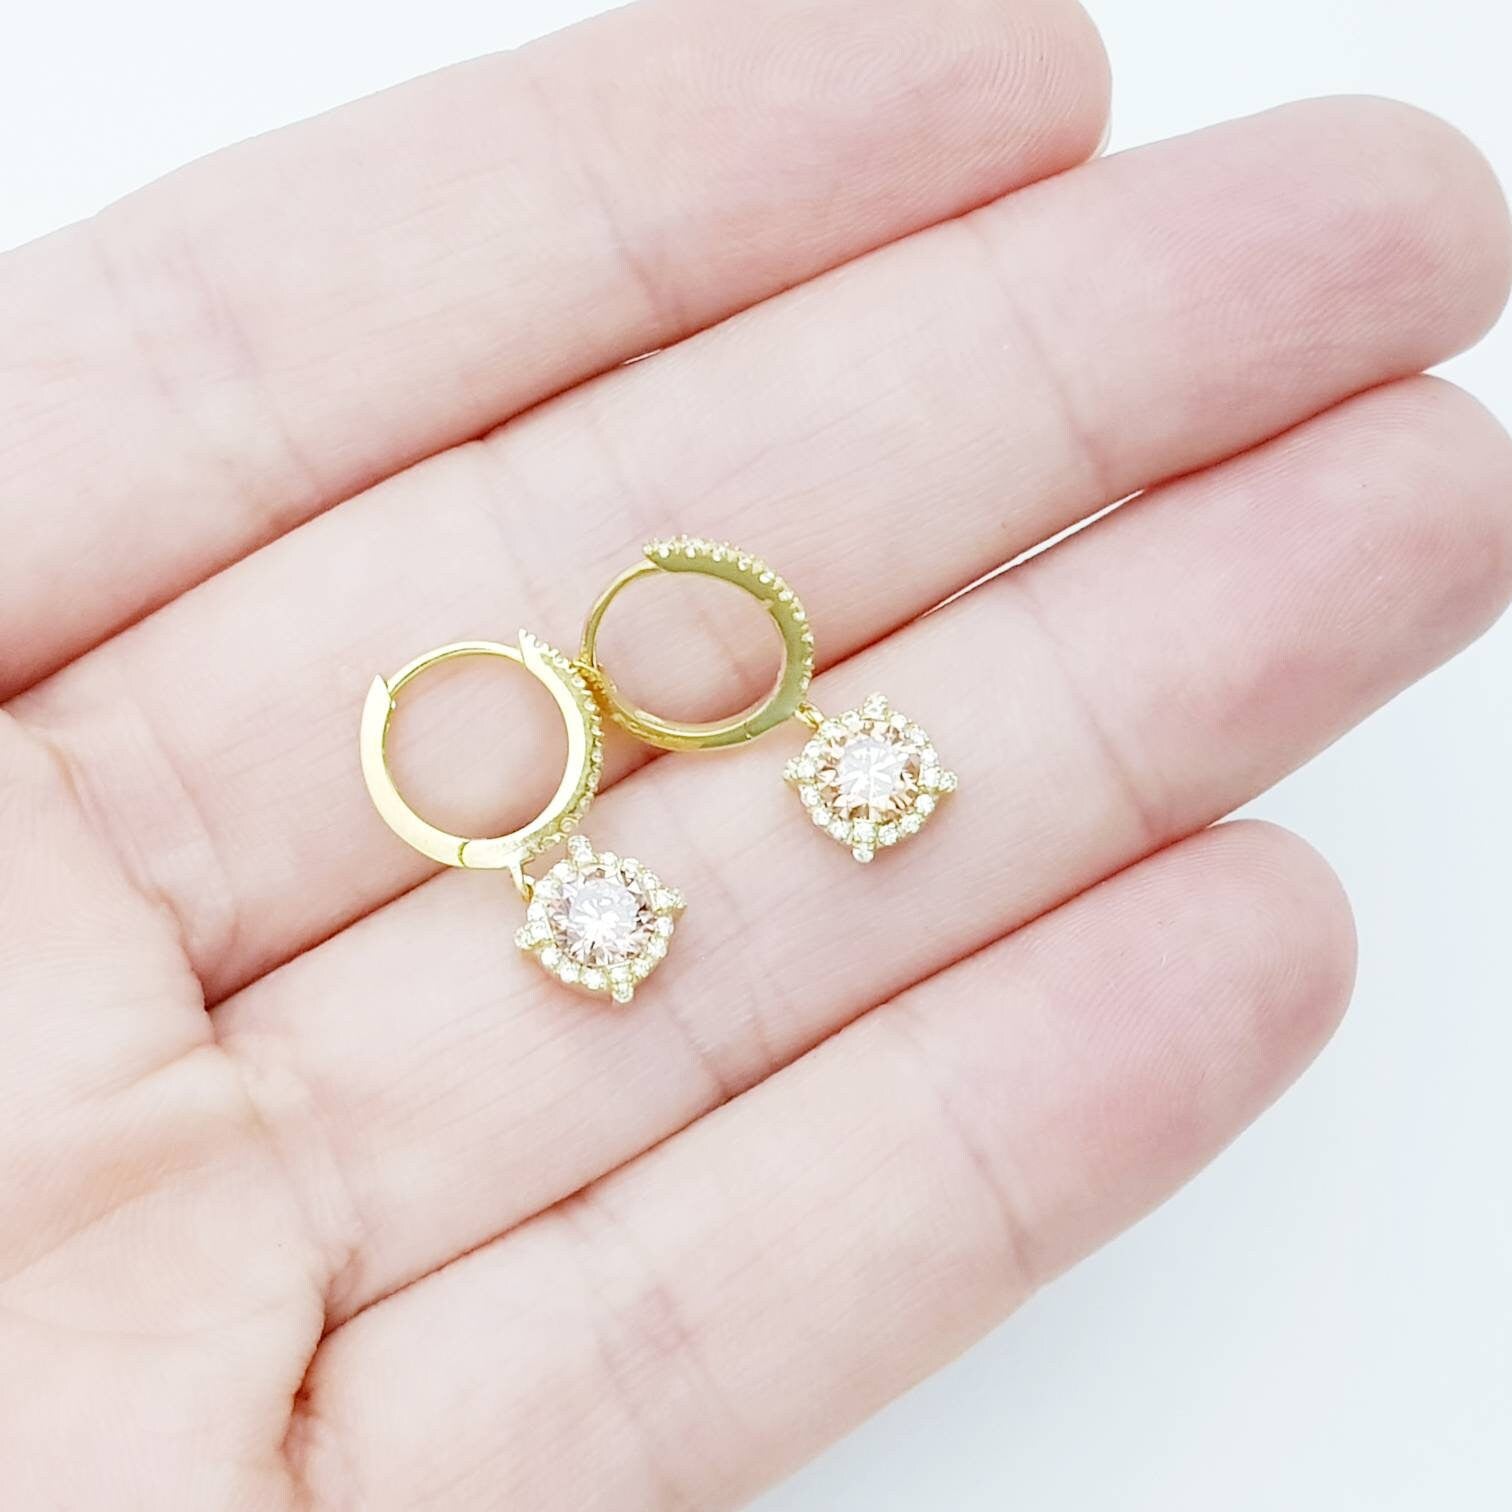 Dainty hoop earrings with small champagne pink drop, cute pink hoop earrings, thin gold plated hoops